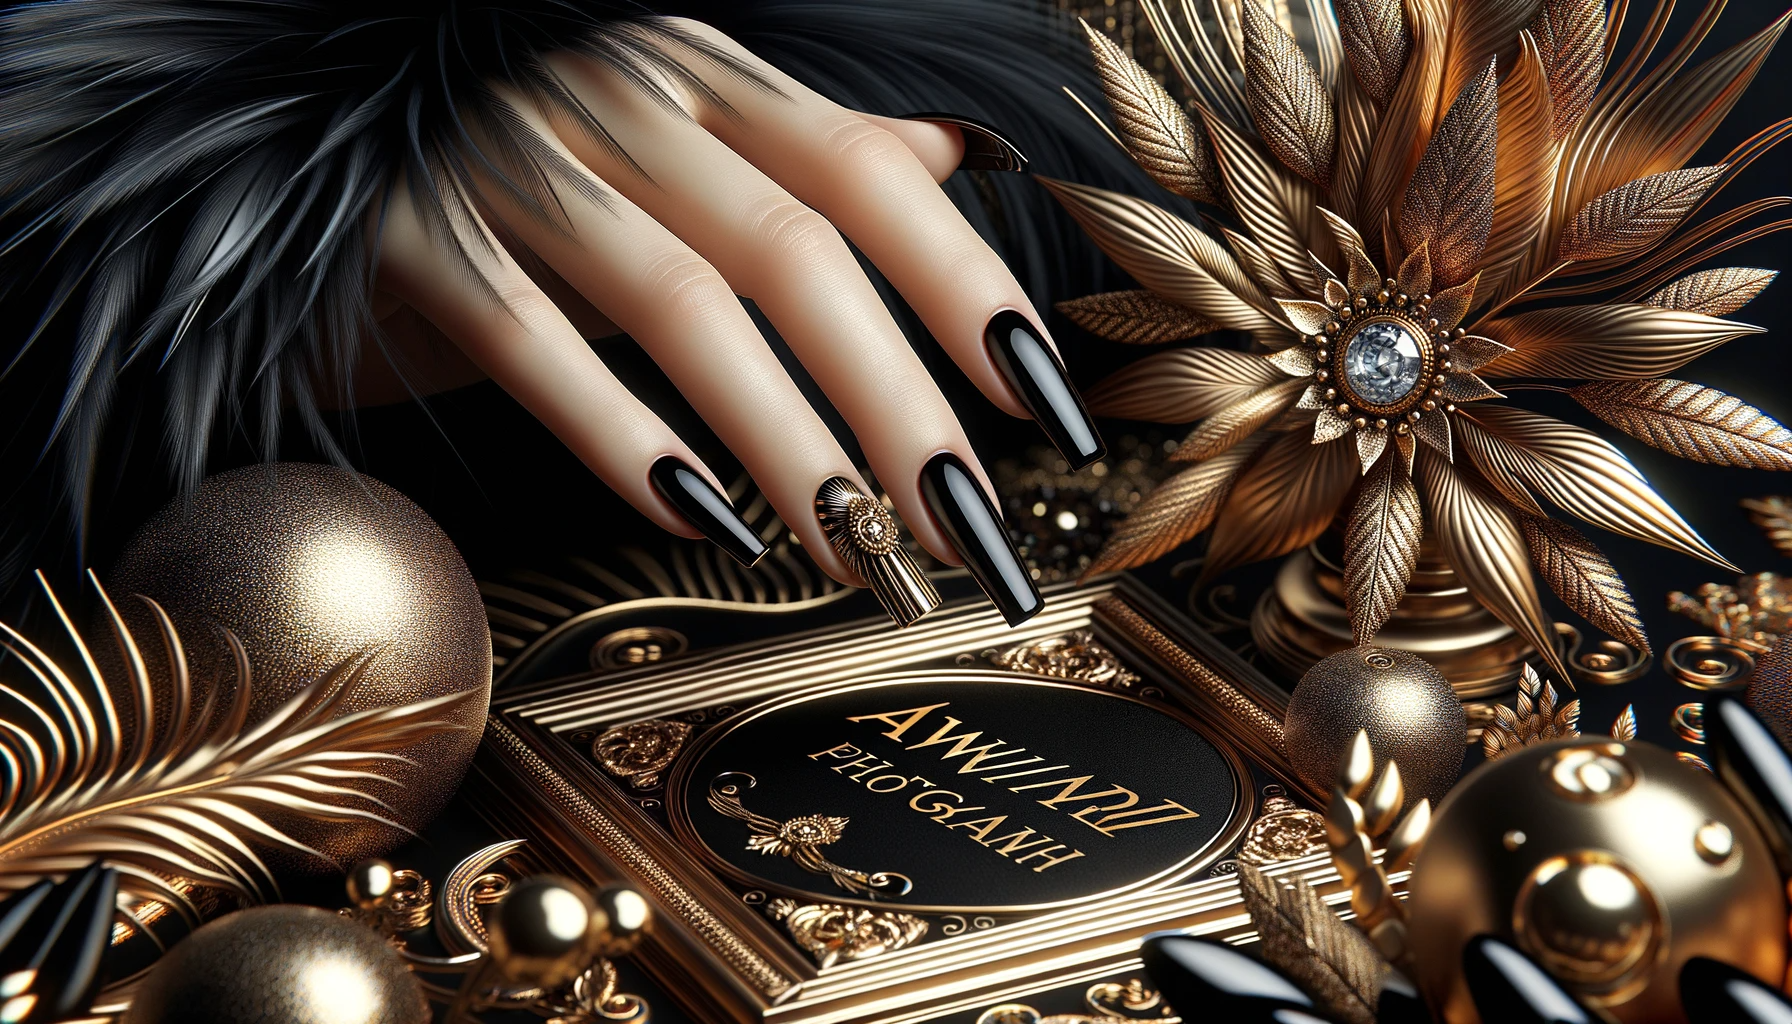 Czarne paznokcie - TOP modnych inspiracji na paznokcie czarne hybrydowe